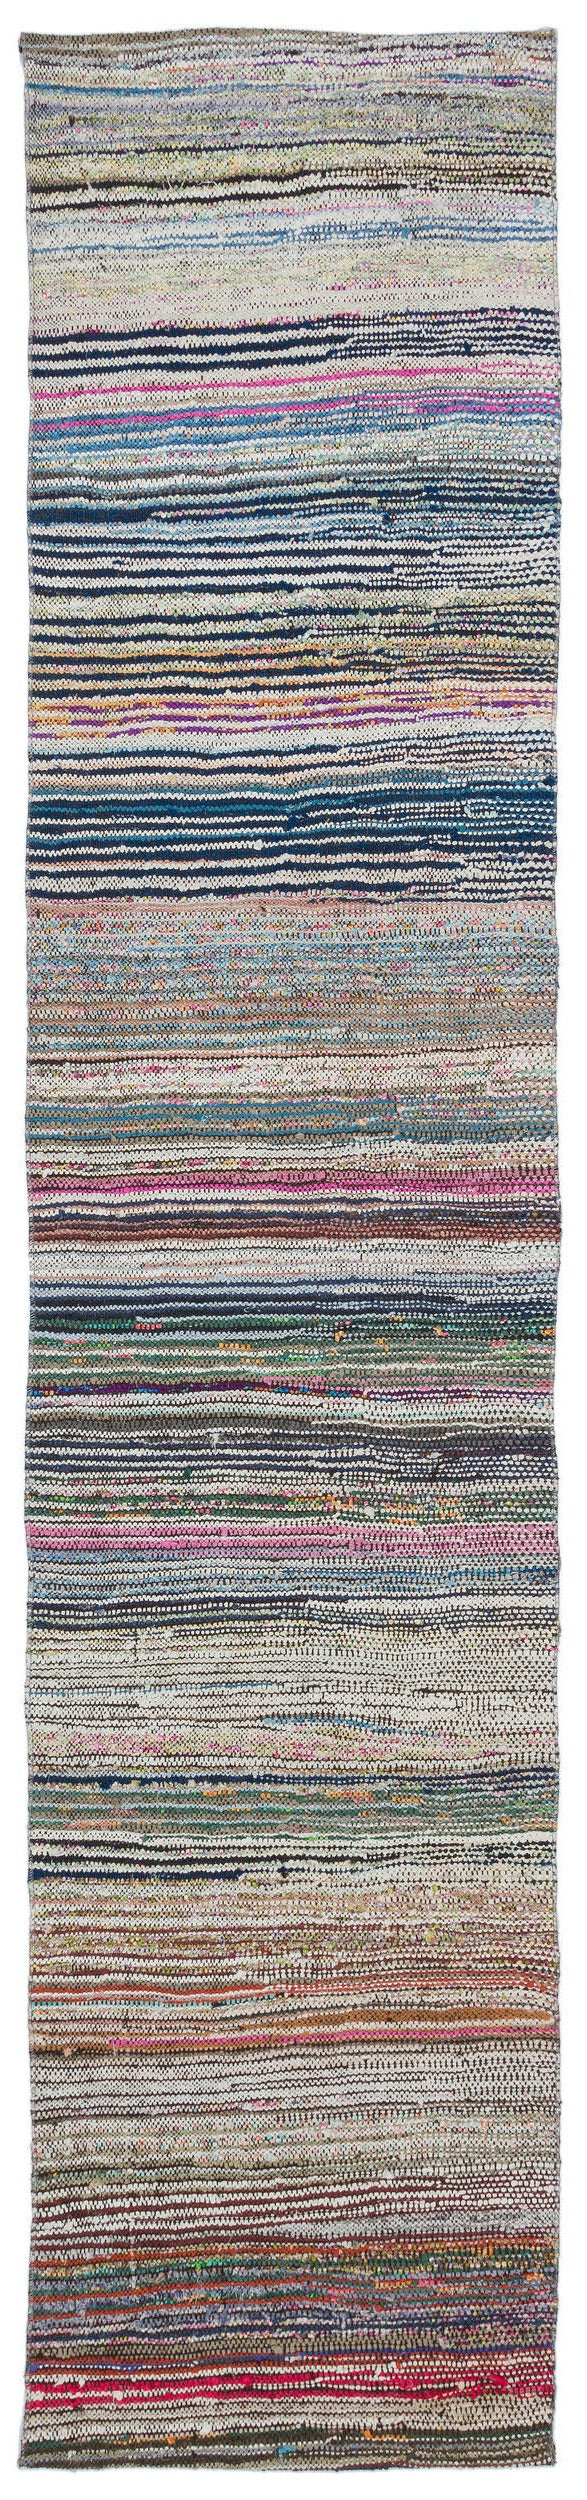 Cretan Brown Striped Wool Hand-Woven Carpet 068 x 310